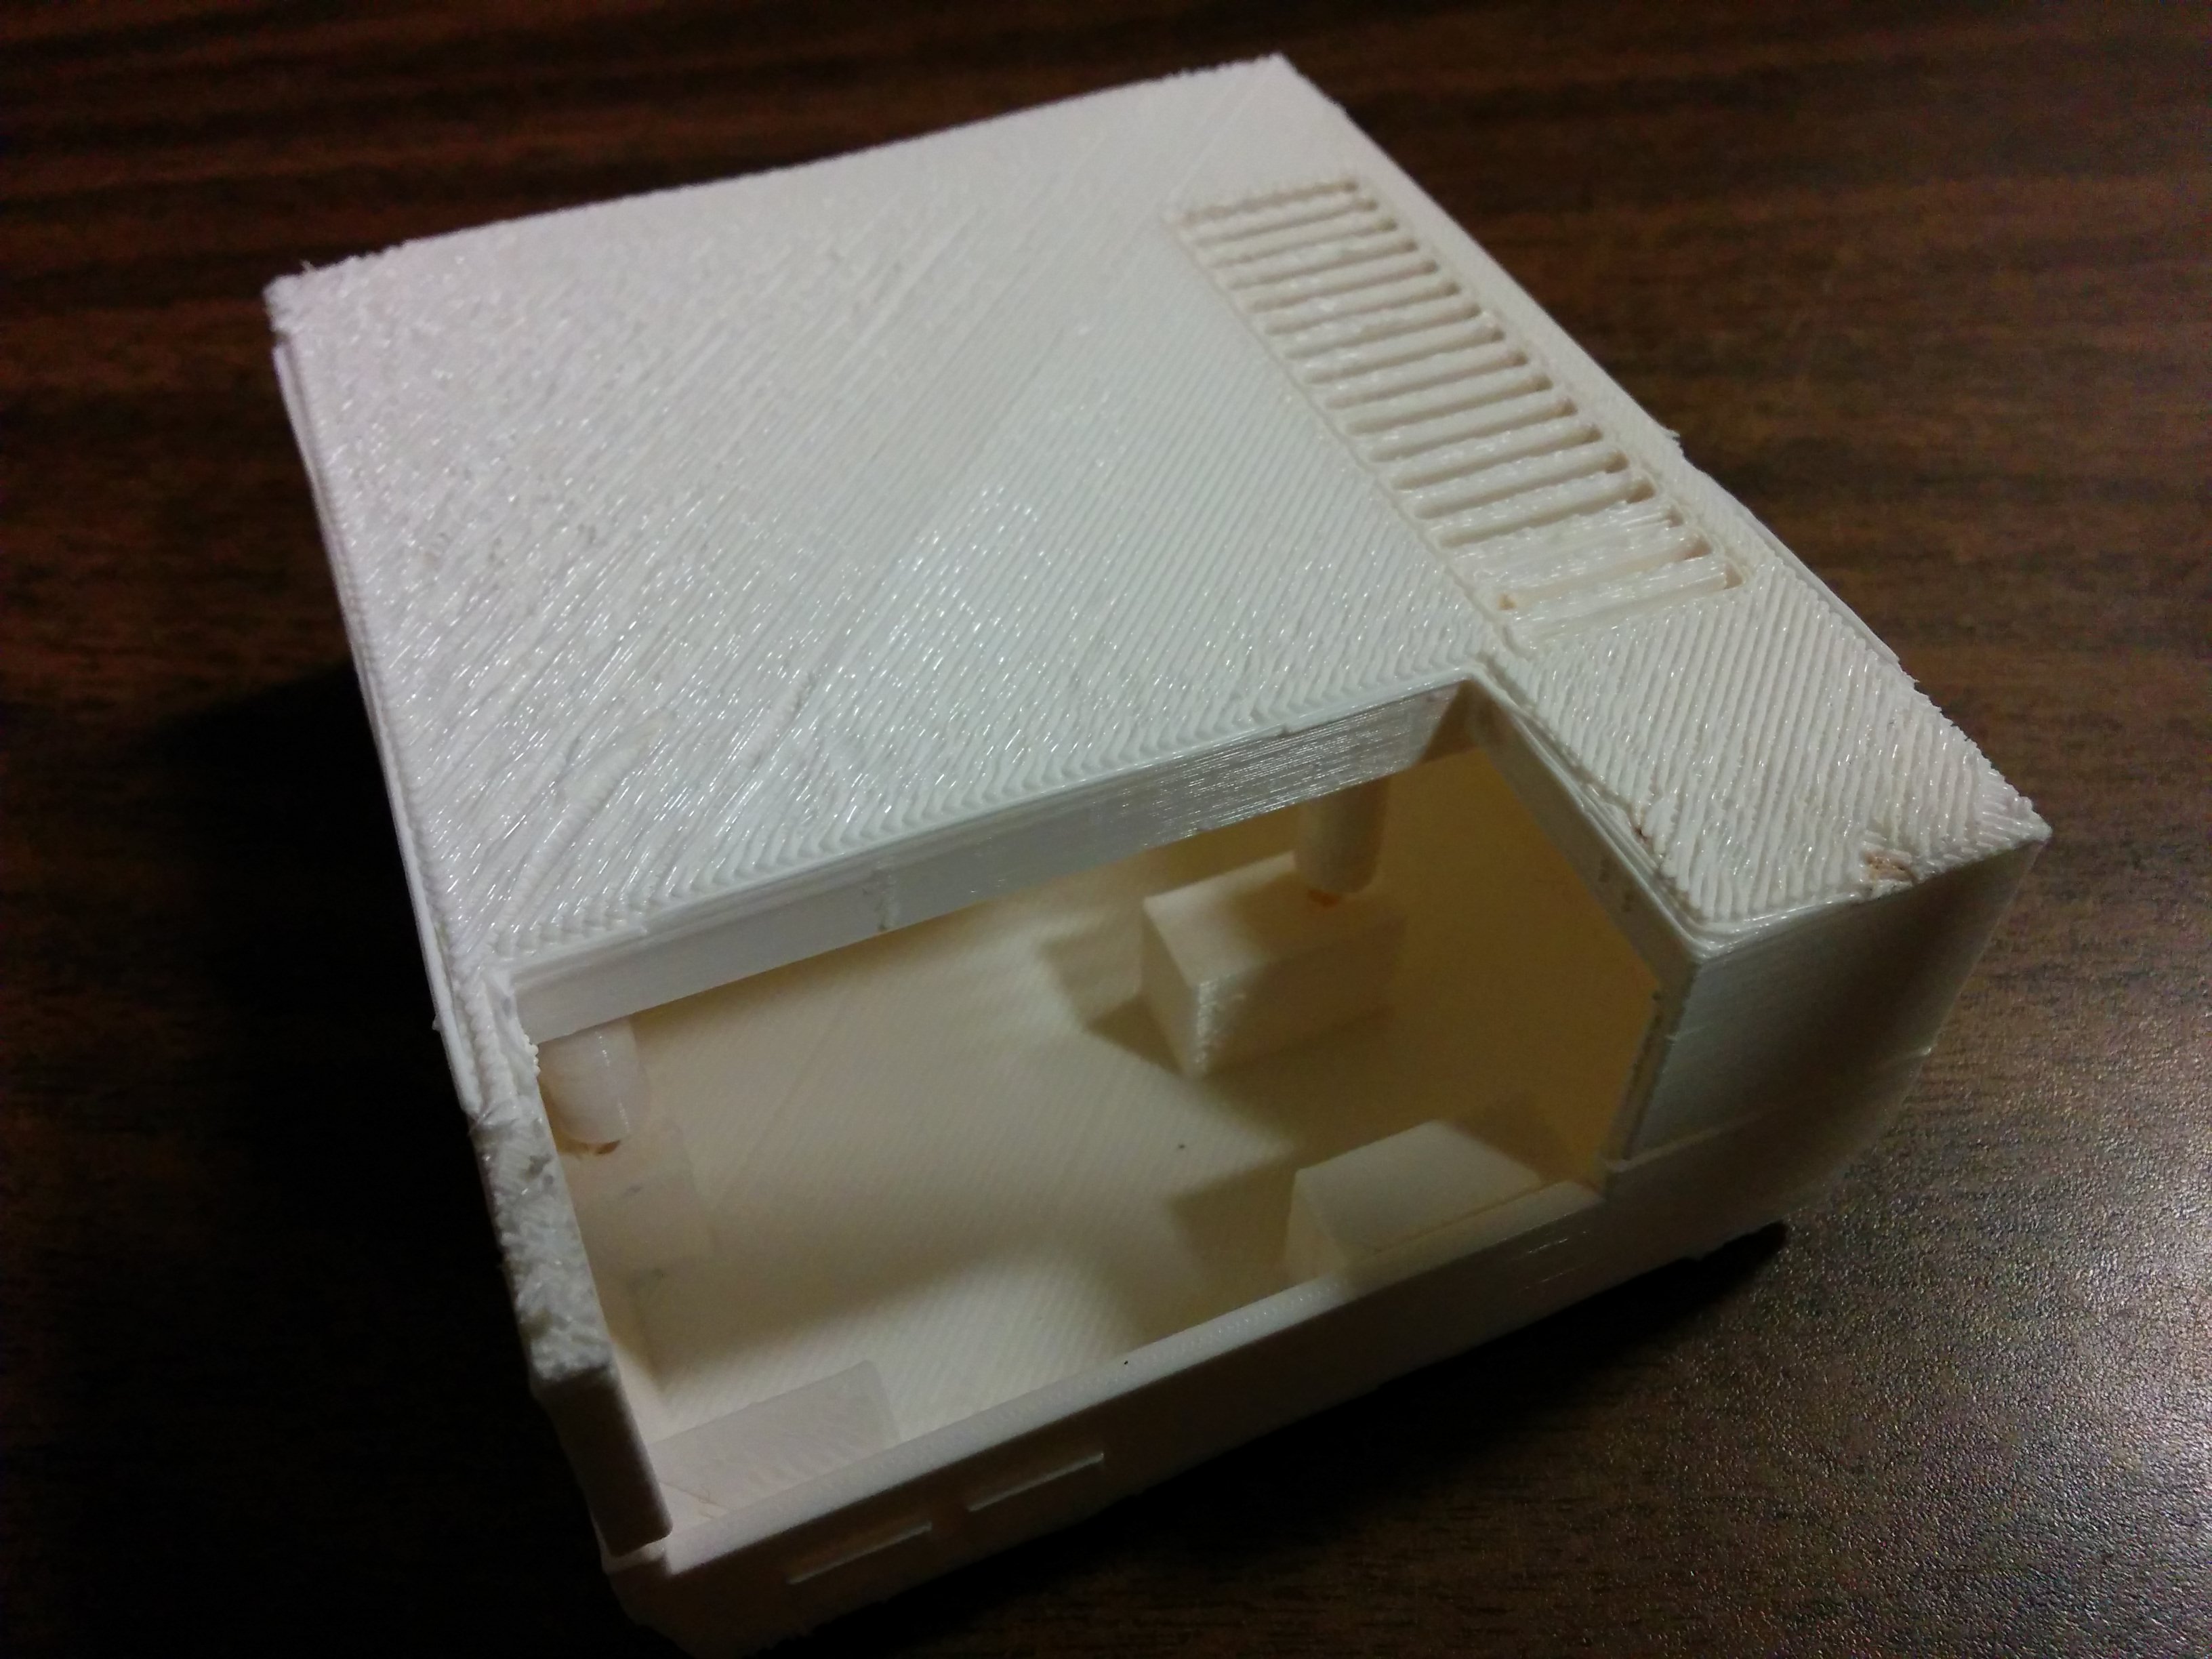 3D Printed NES case.